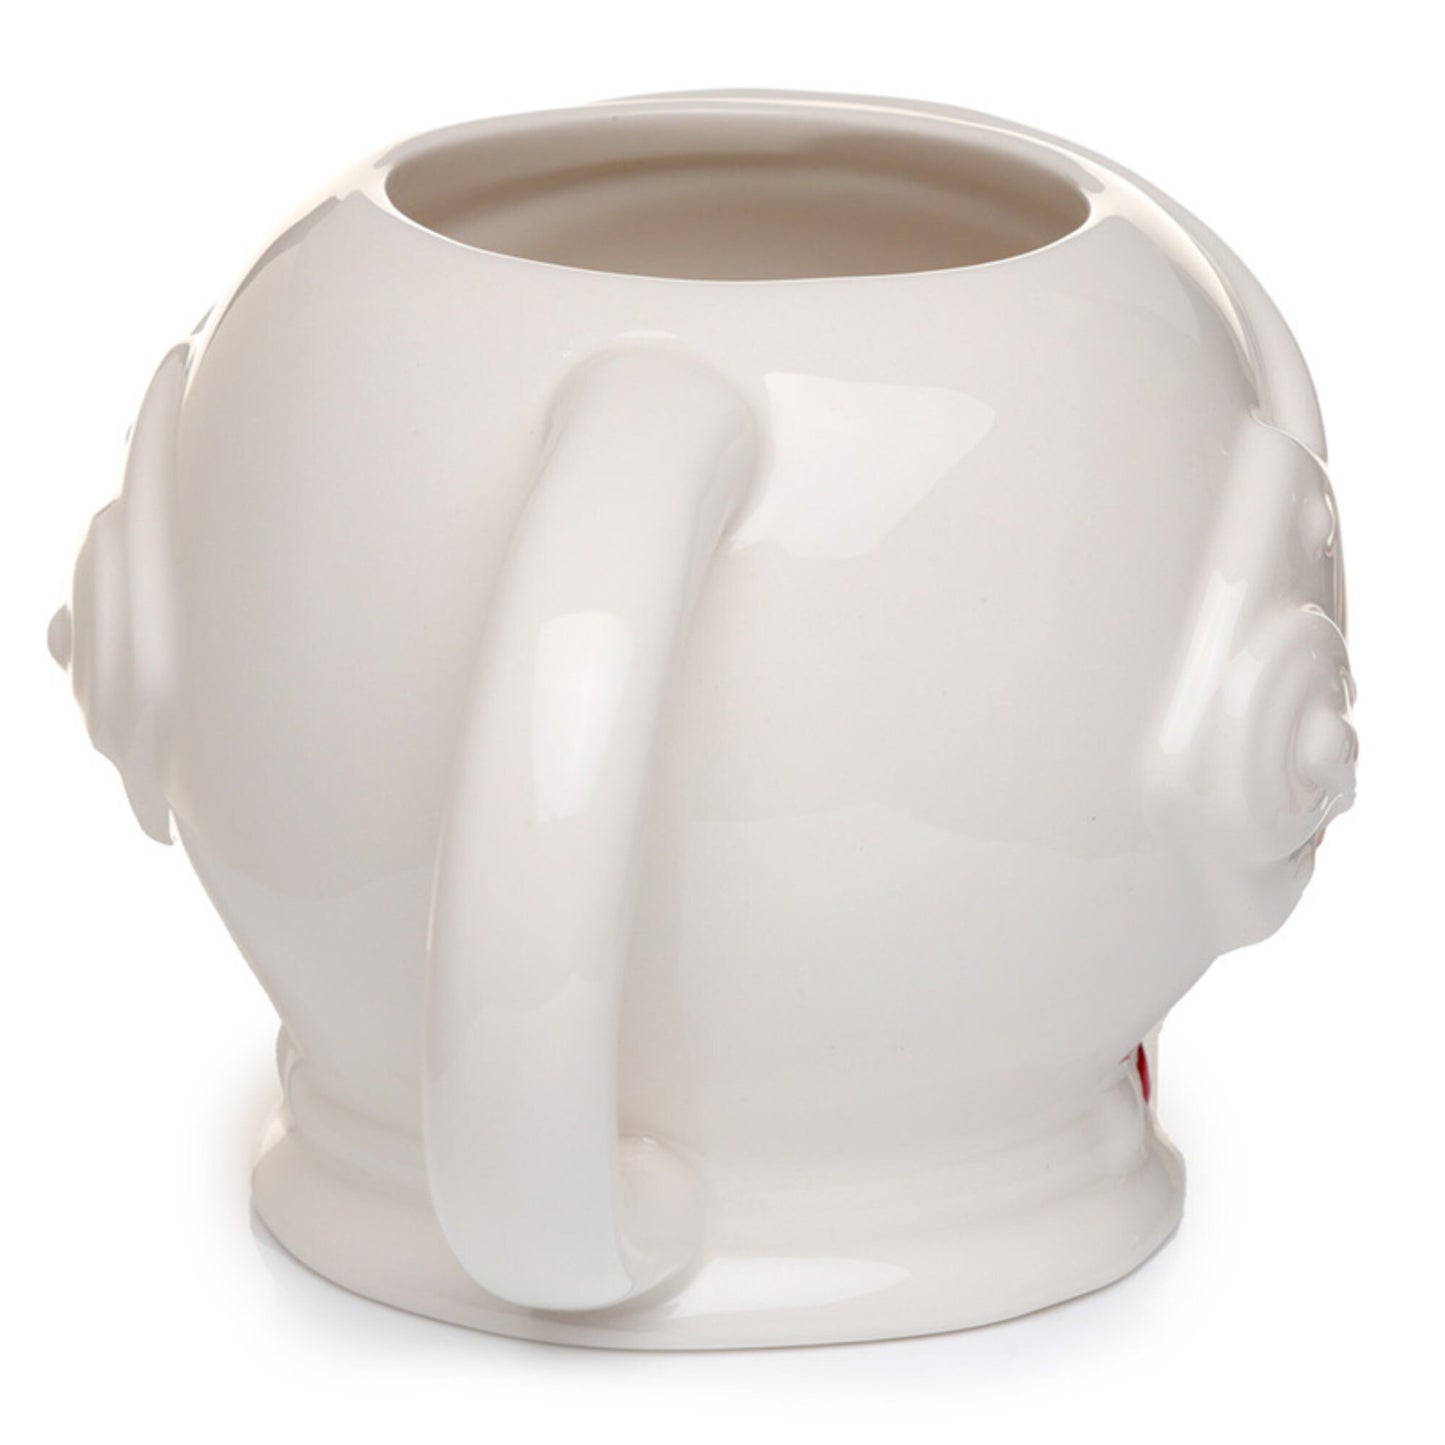 Novelty Space Helmet Shaped Ceramic Mug